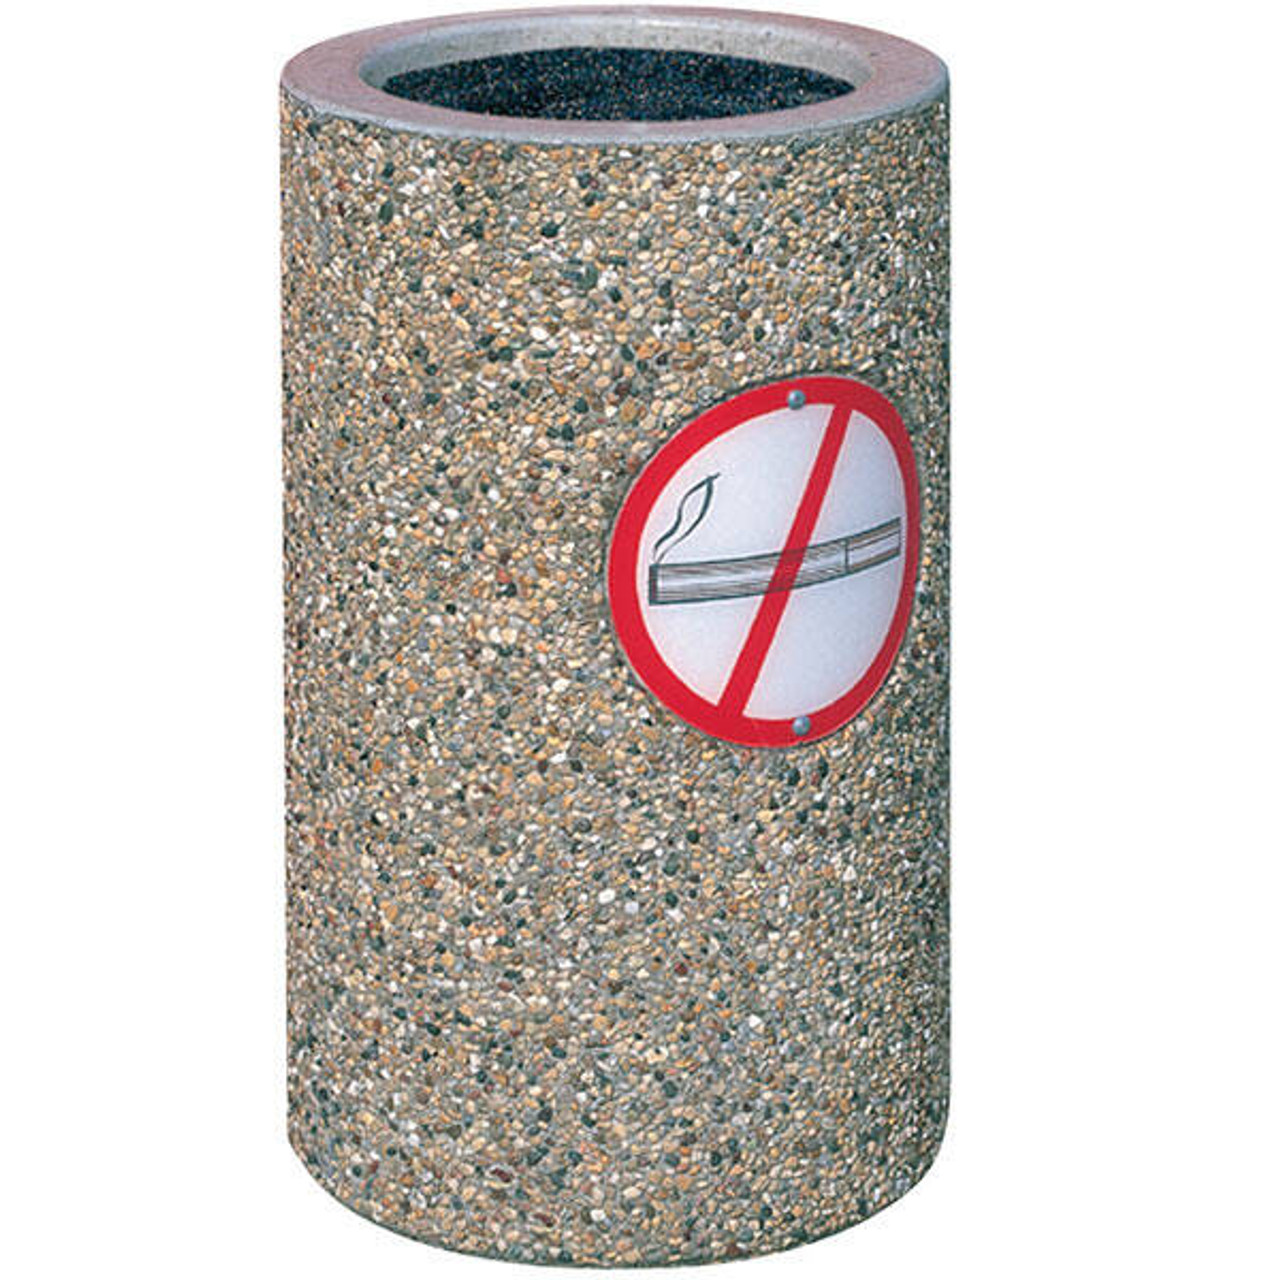 Concrete Ash Urn Outdoor Ashtray TF2005 with No Smoking Logo